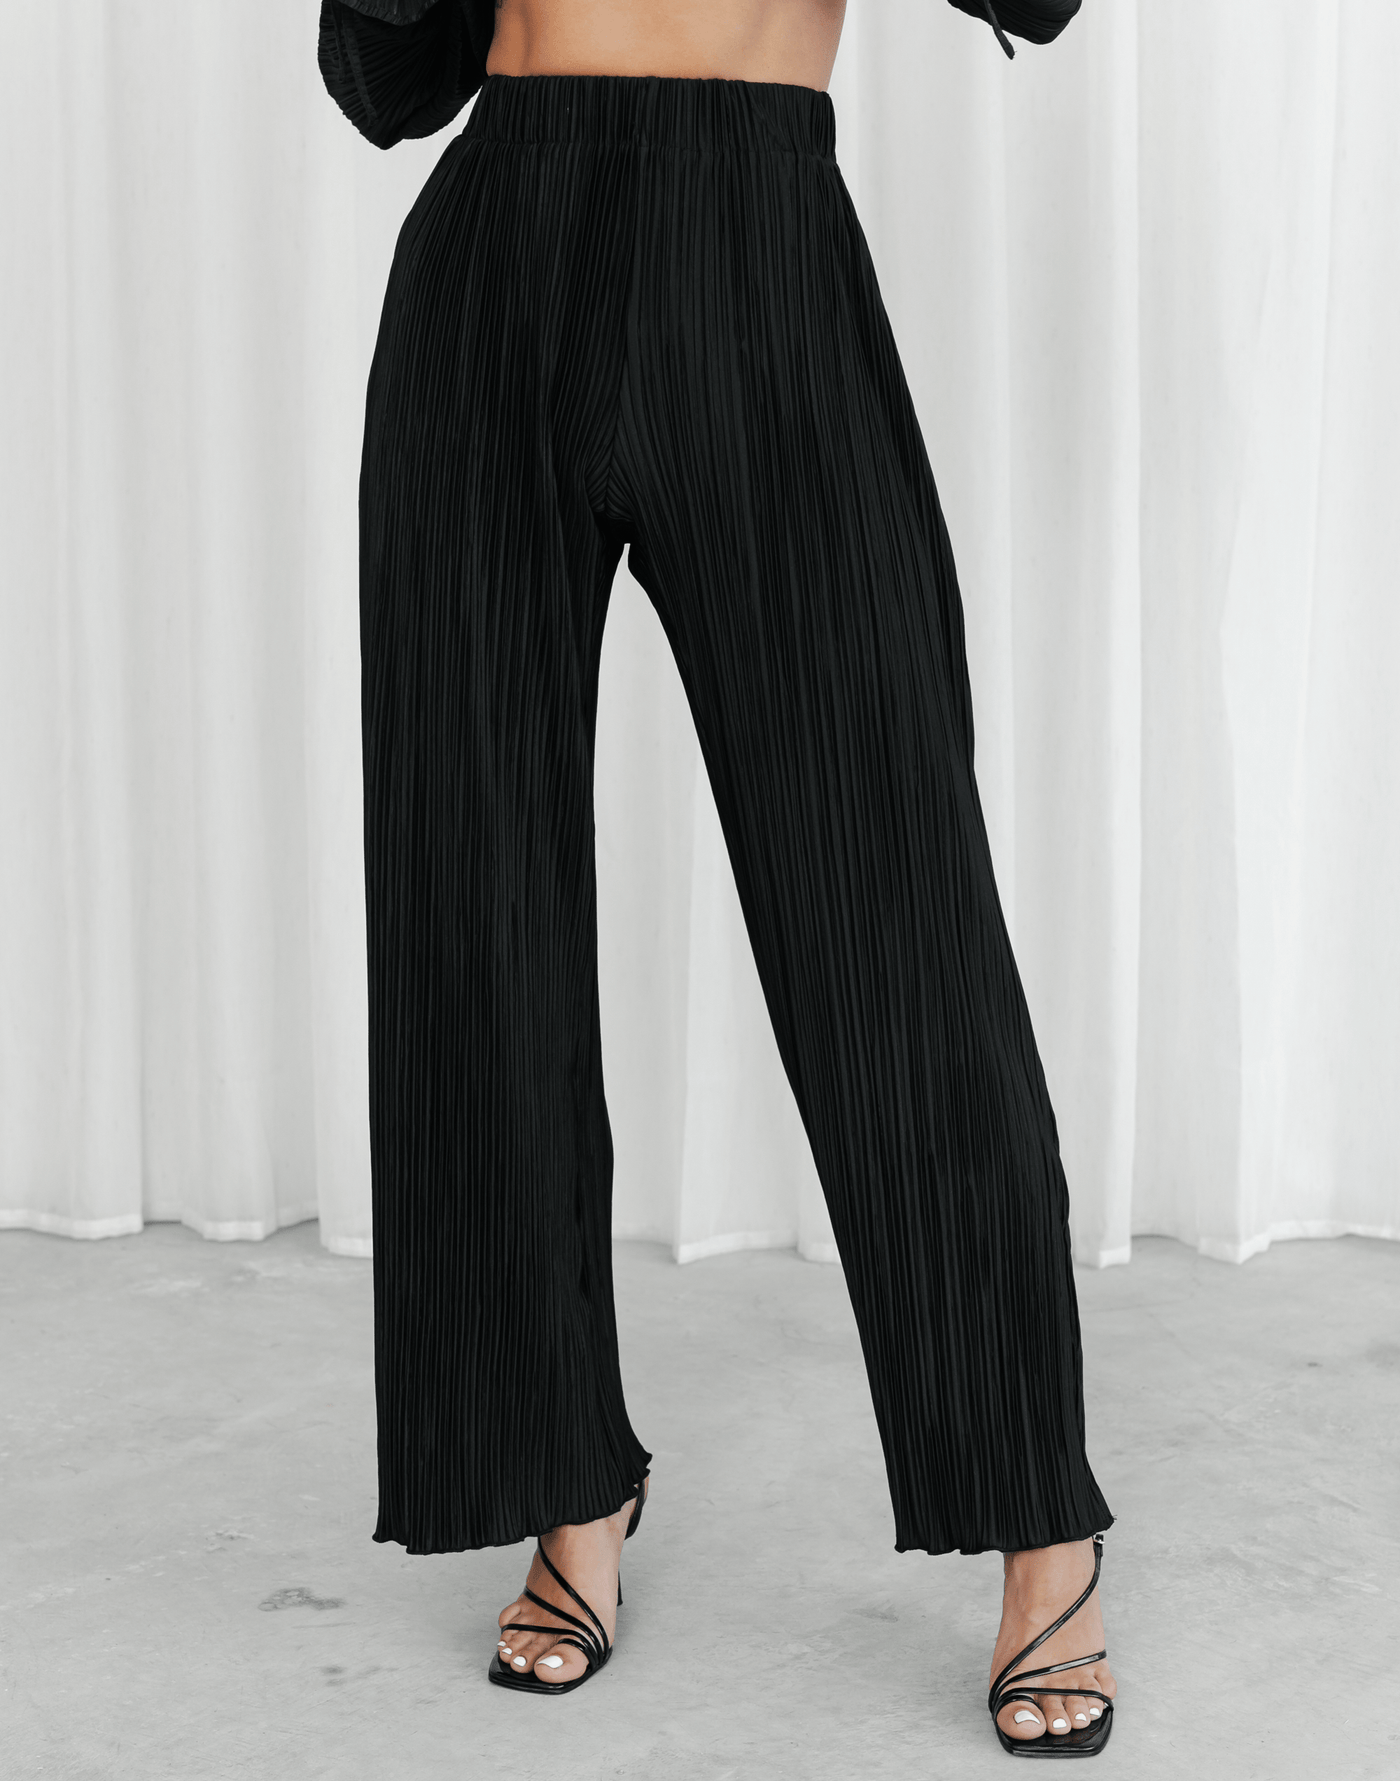 Sweet Serenity Pants (Black) - Black Pleated Pants - Women's Pants - Charcoal Clothing